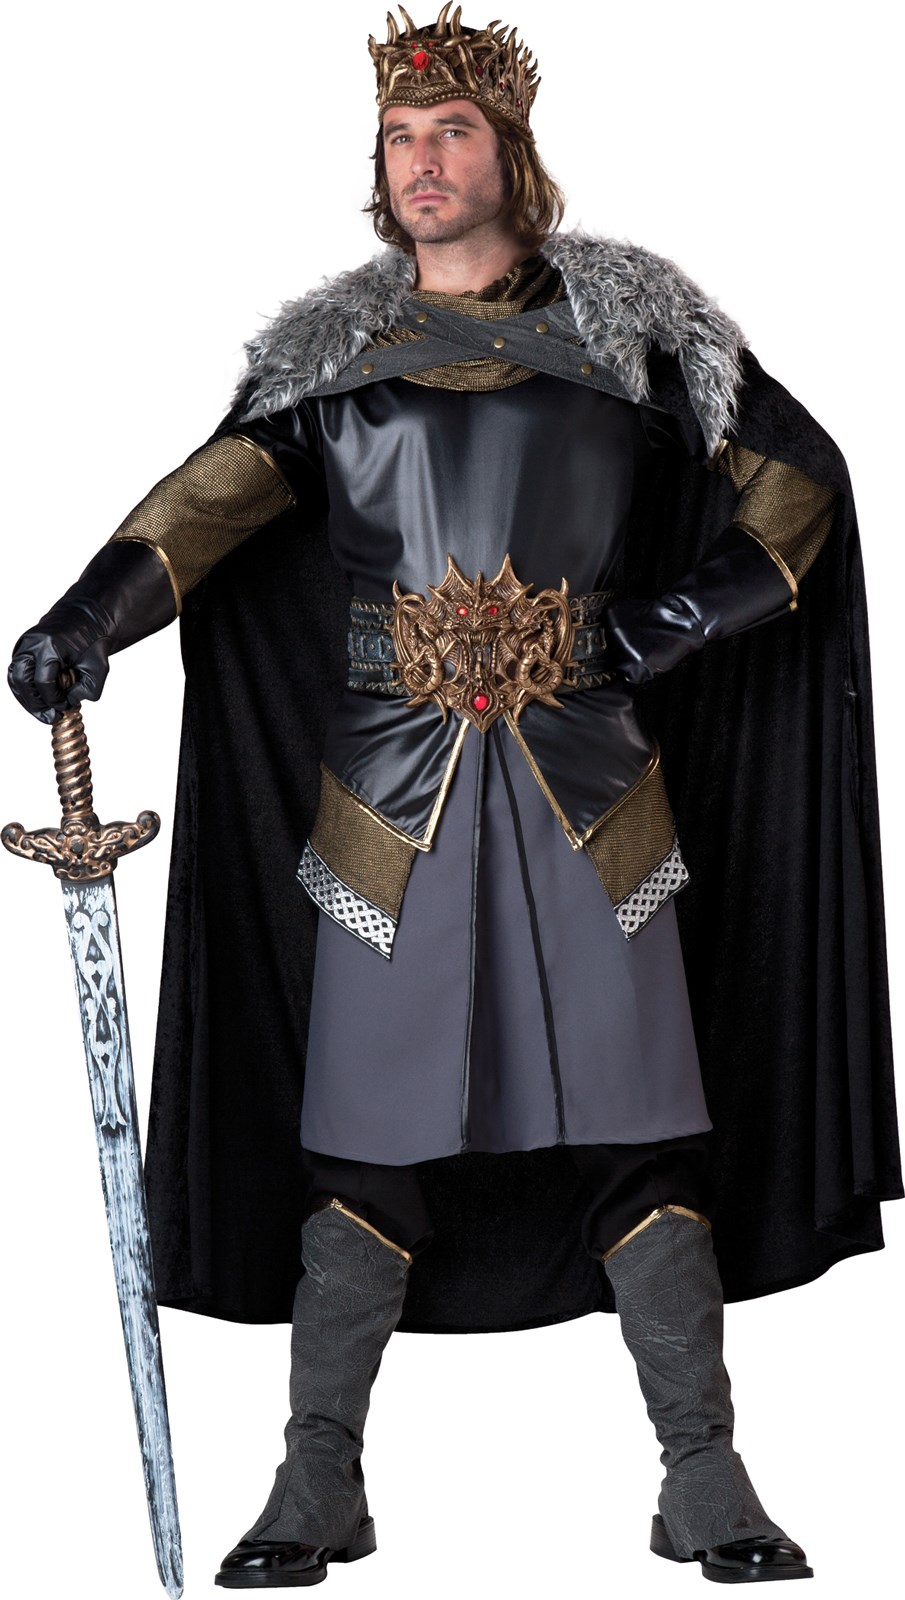 Medieval King Adult Costume